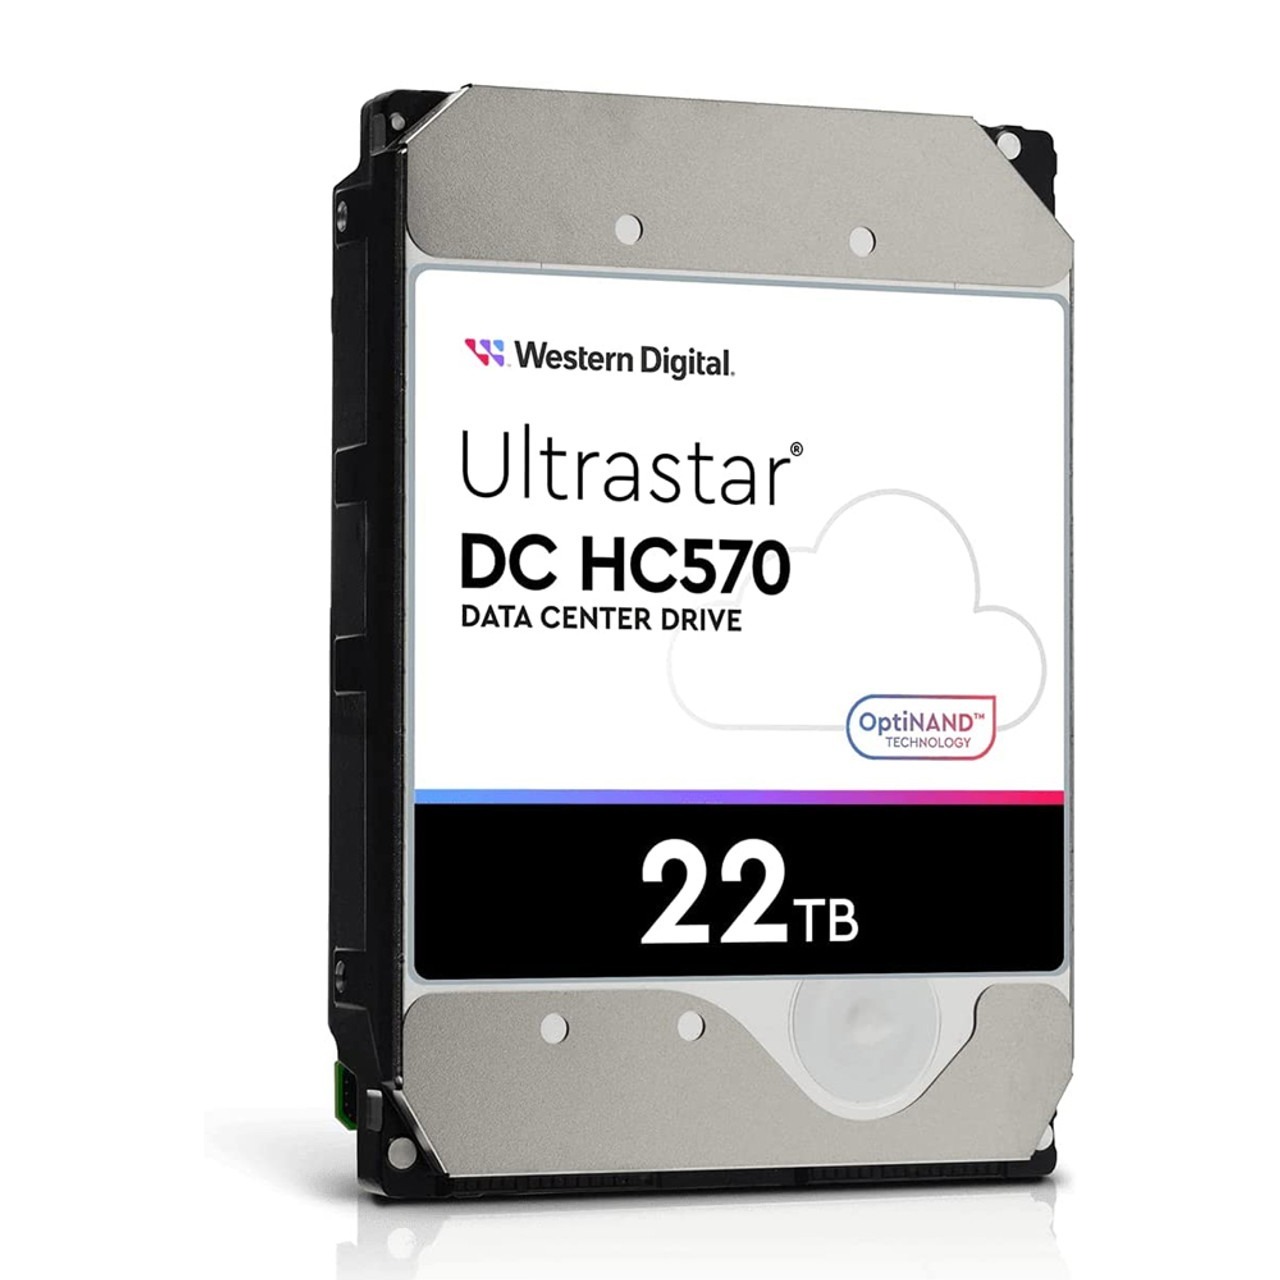 22TB Western Digital Ultrastar DC HC570 3.5" 7.2K RPM SATA (6.0 Gb/s) Internal Hard Drive $370 + Free Shipping